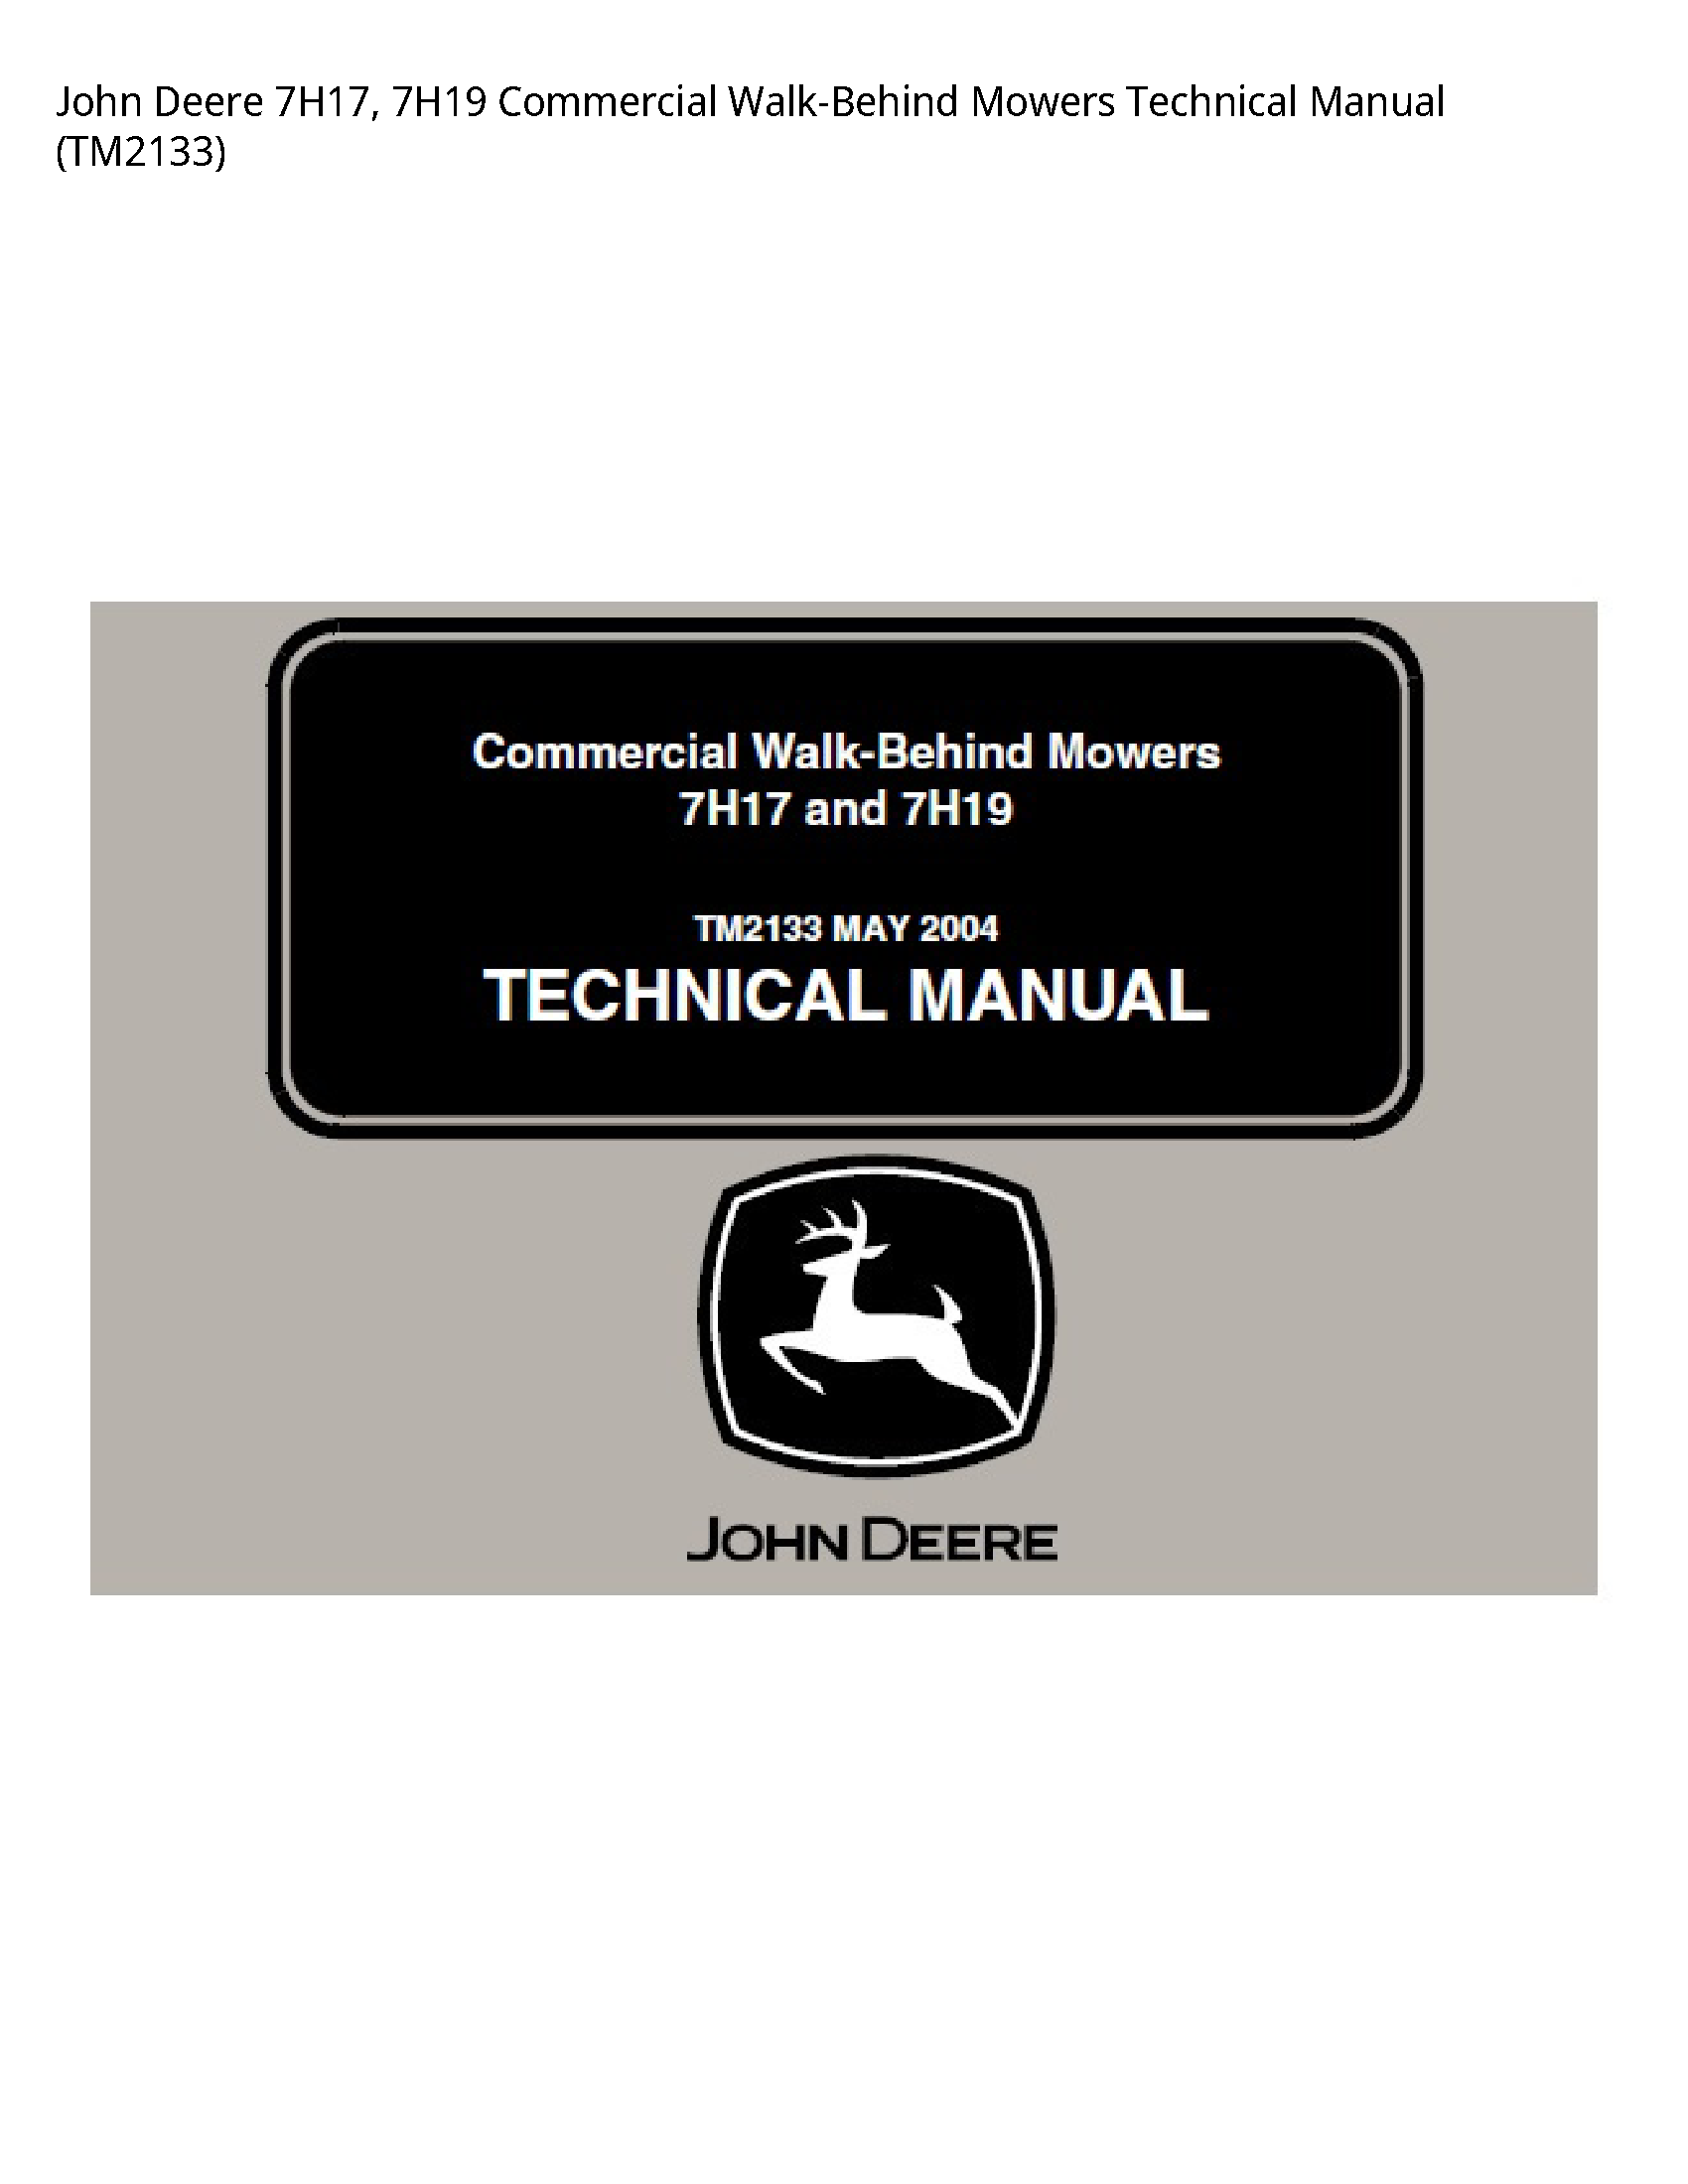 John Deere 7H17 Commercial Walk-Behind Mowers Technical manual